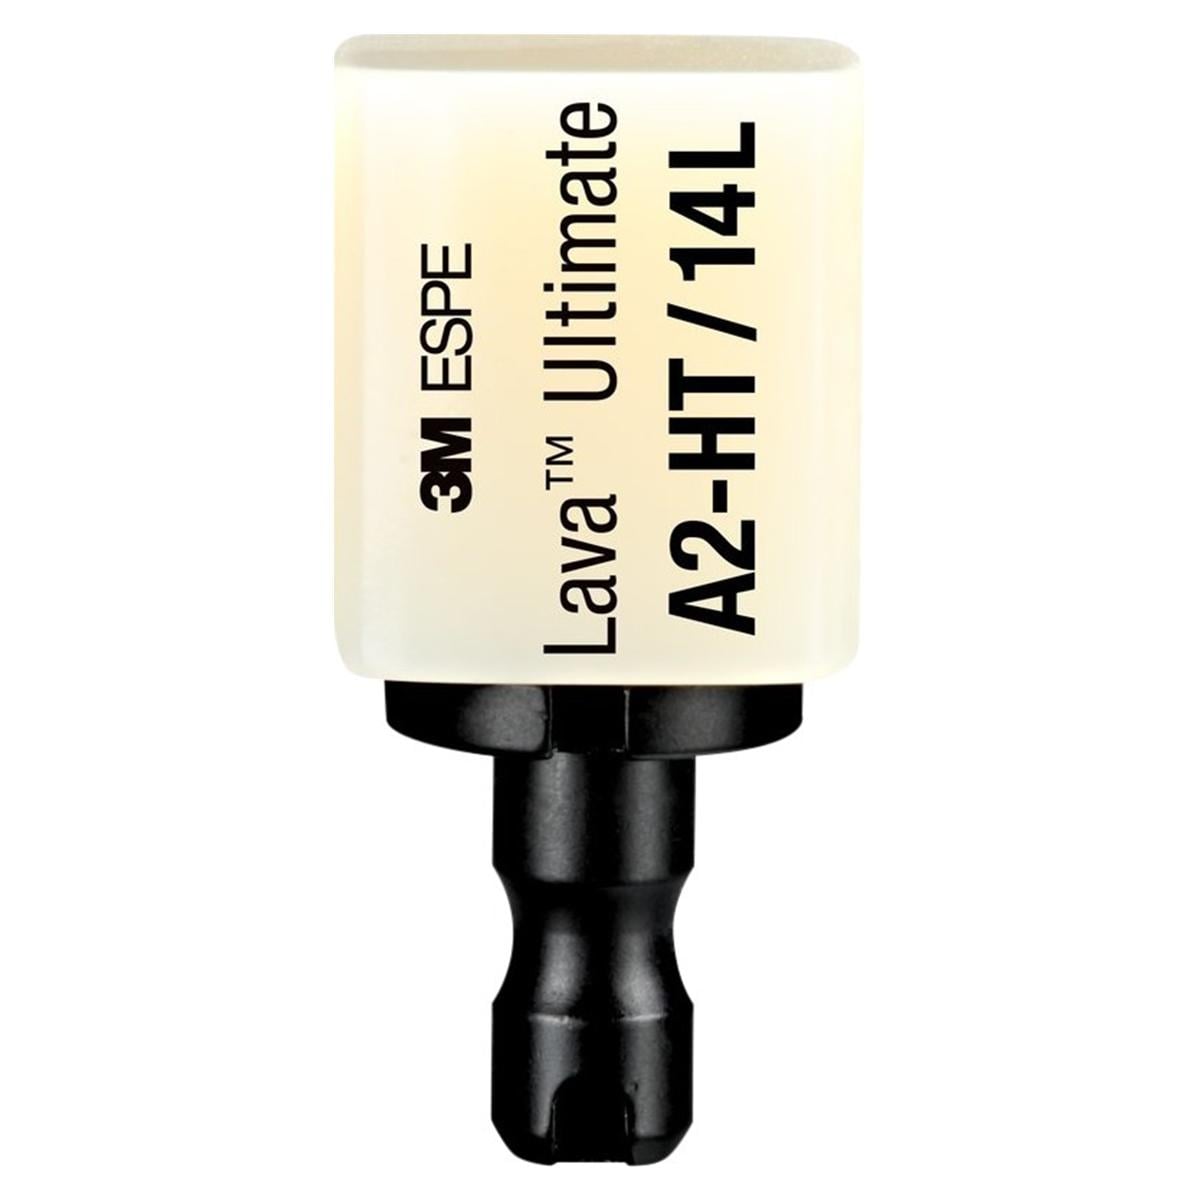 Lava Ultimate - LT, I12, A3